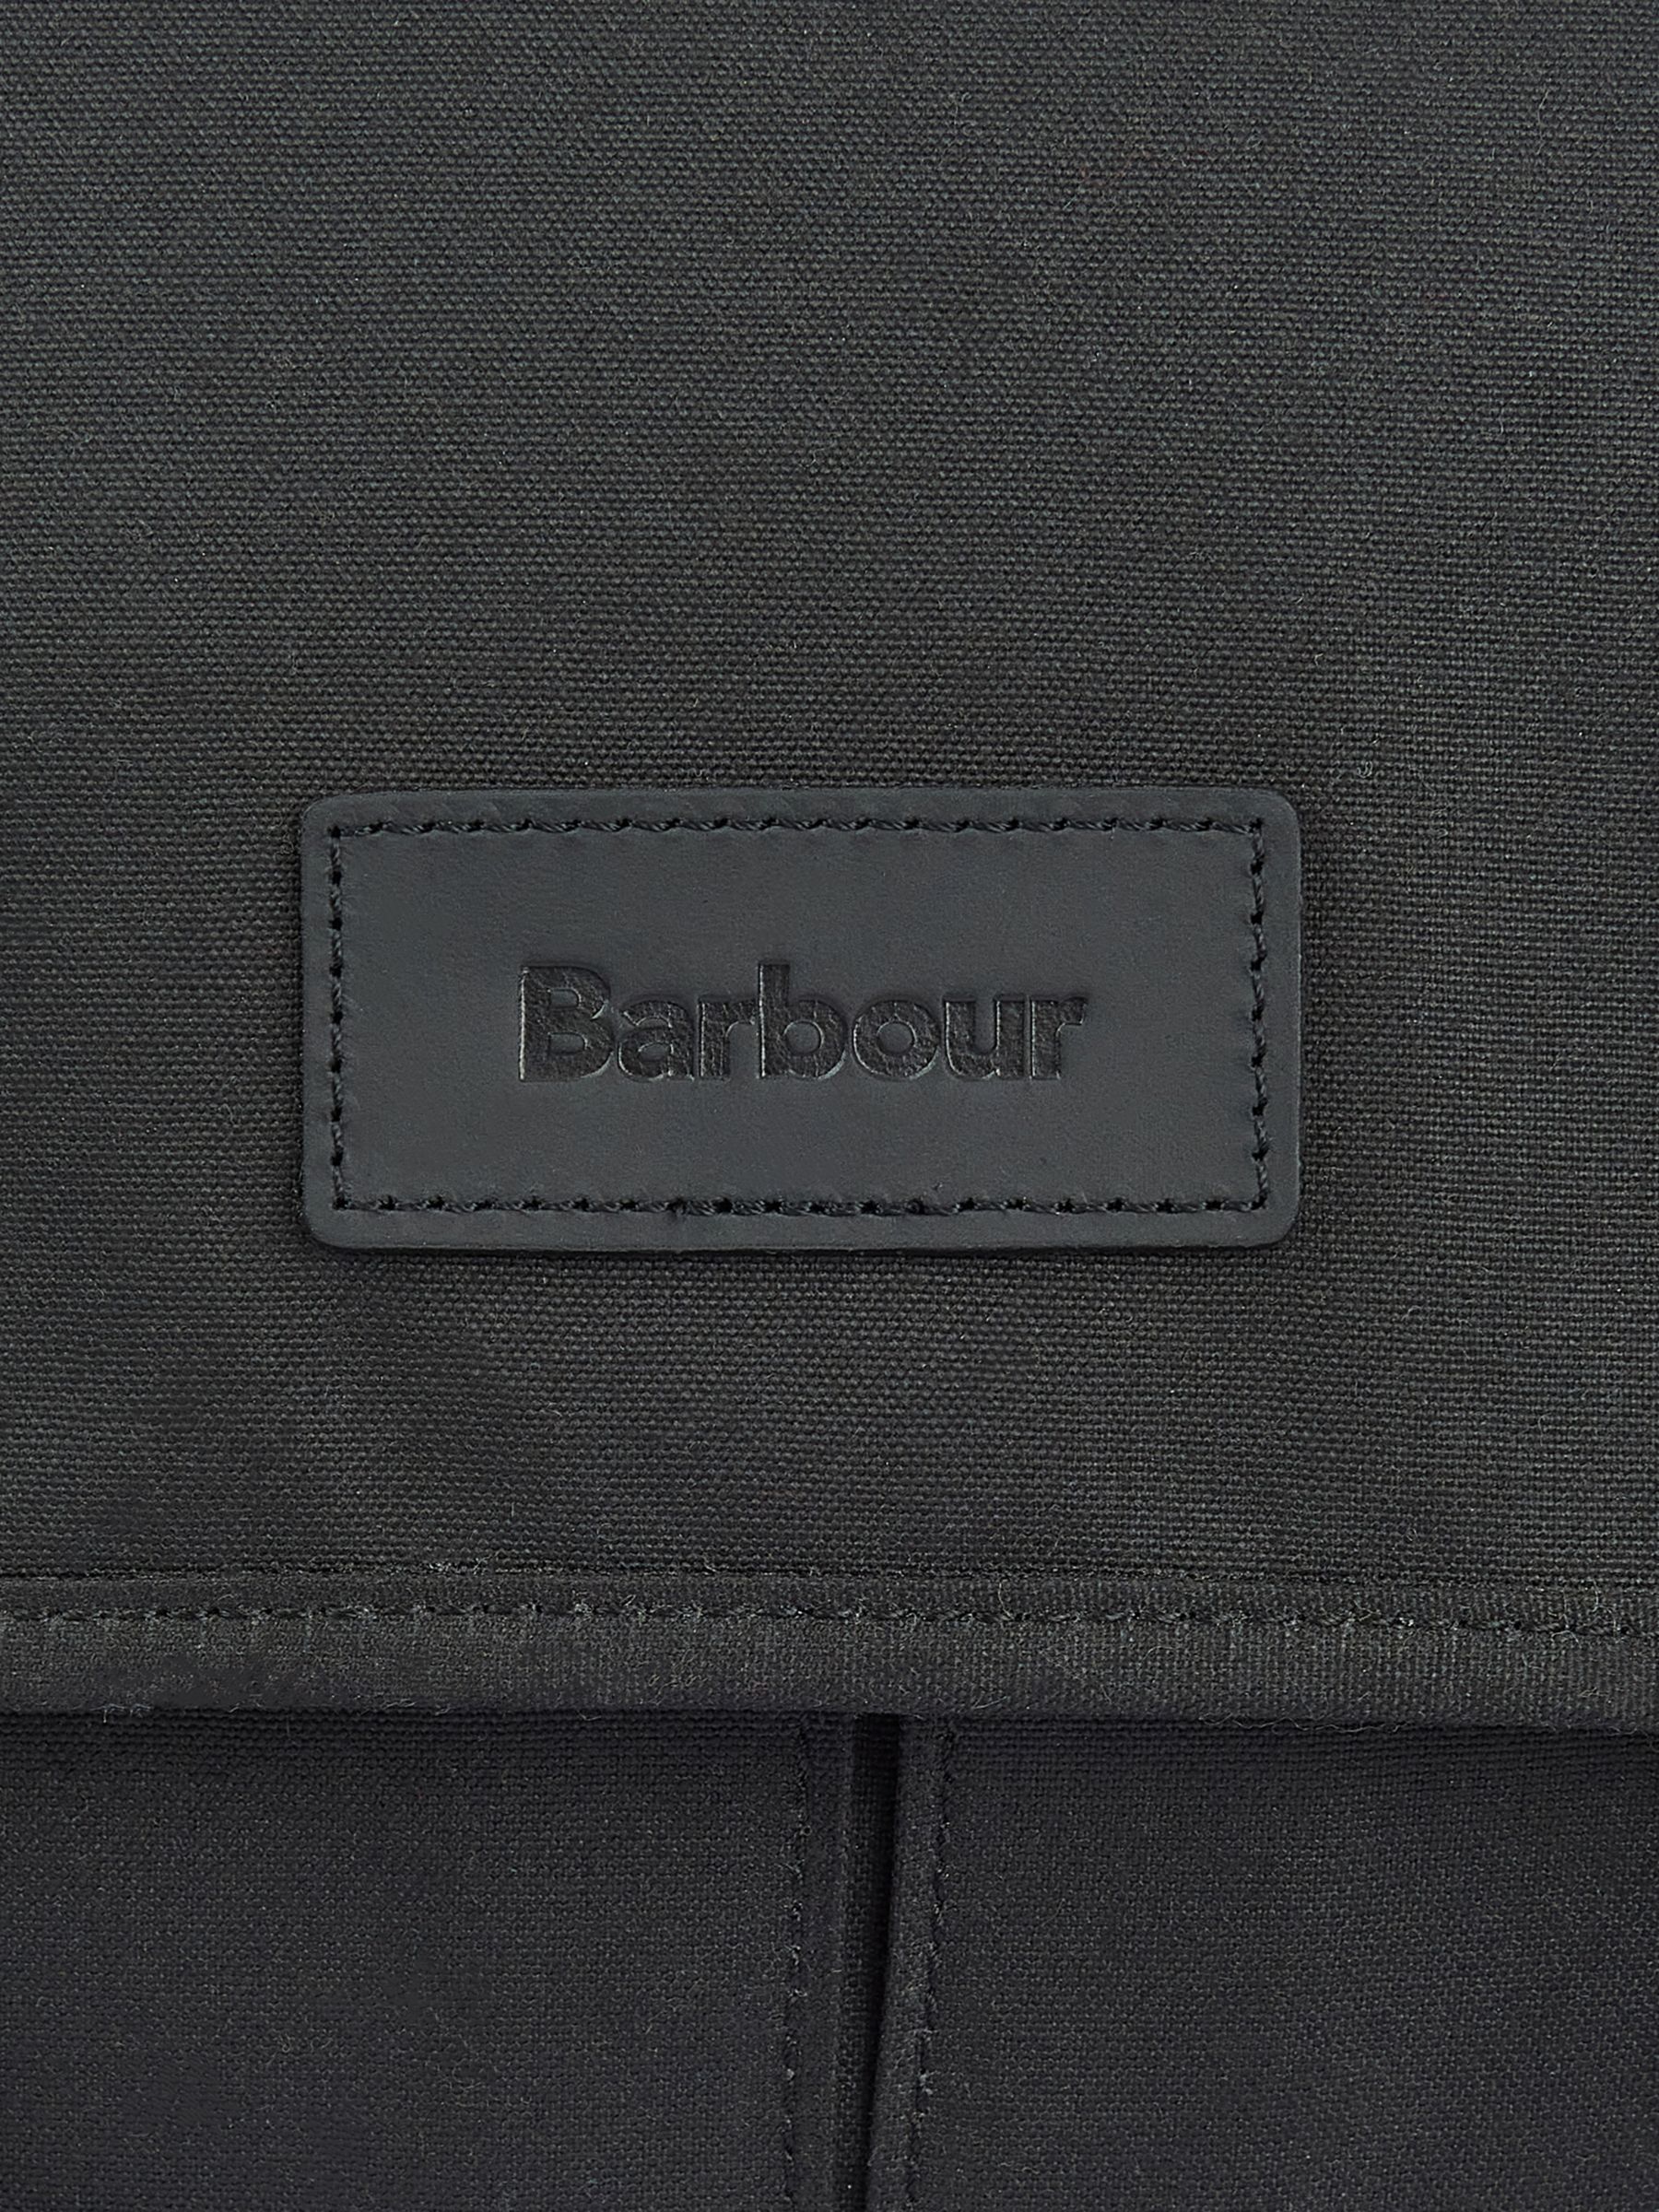 Barbour Essential Wax Messenger Bag, Black at John Lewis & Partners